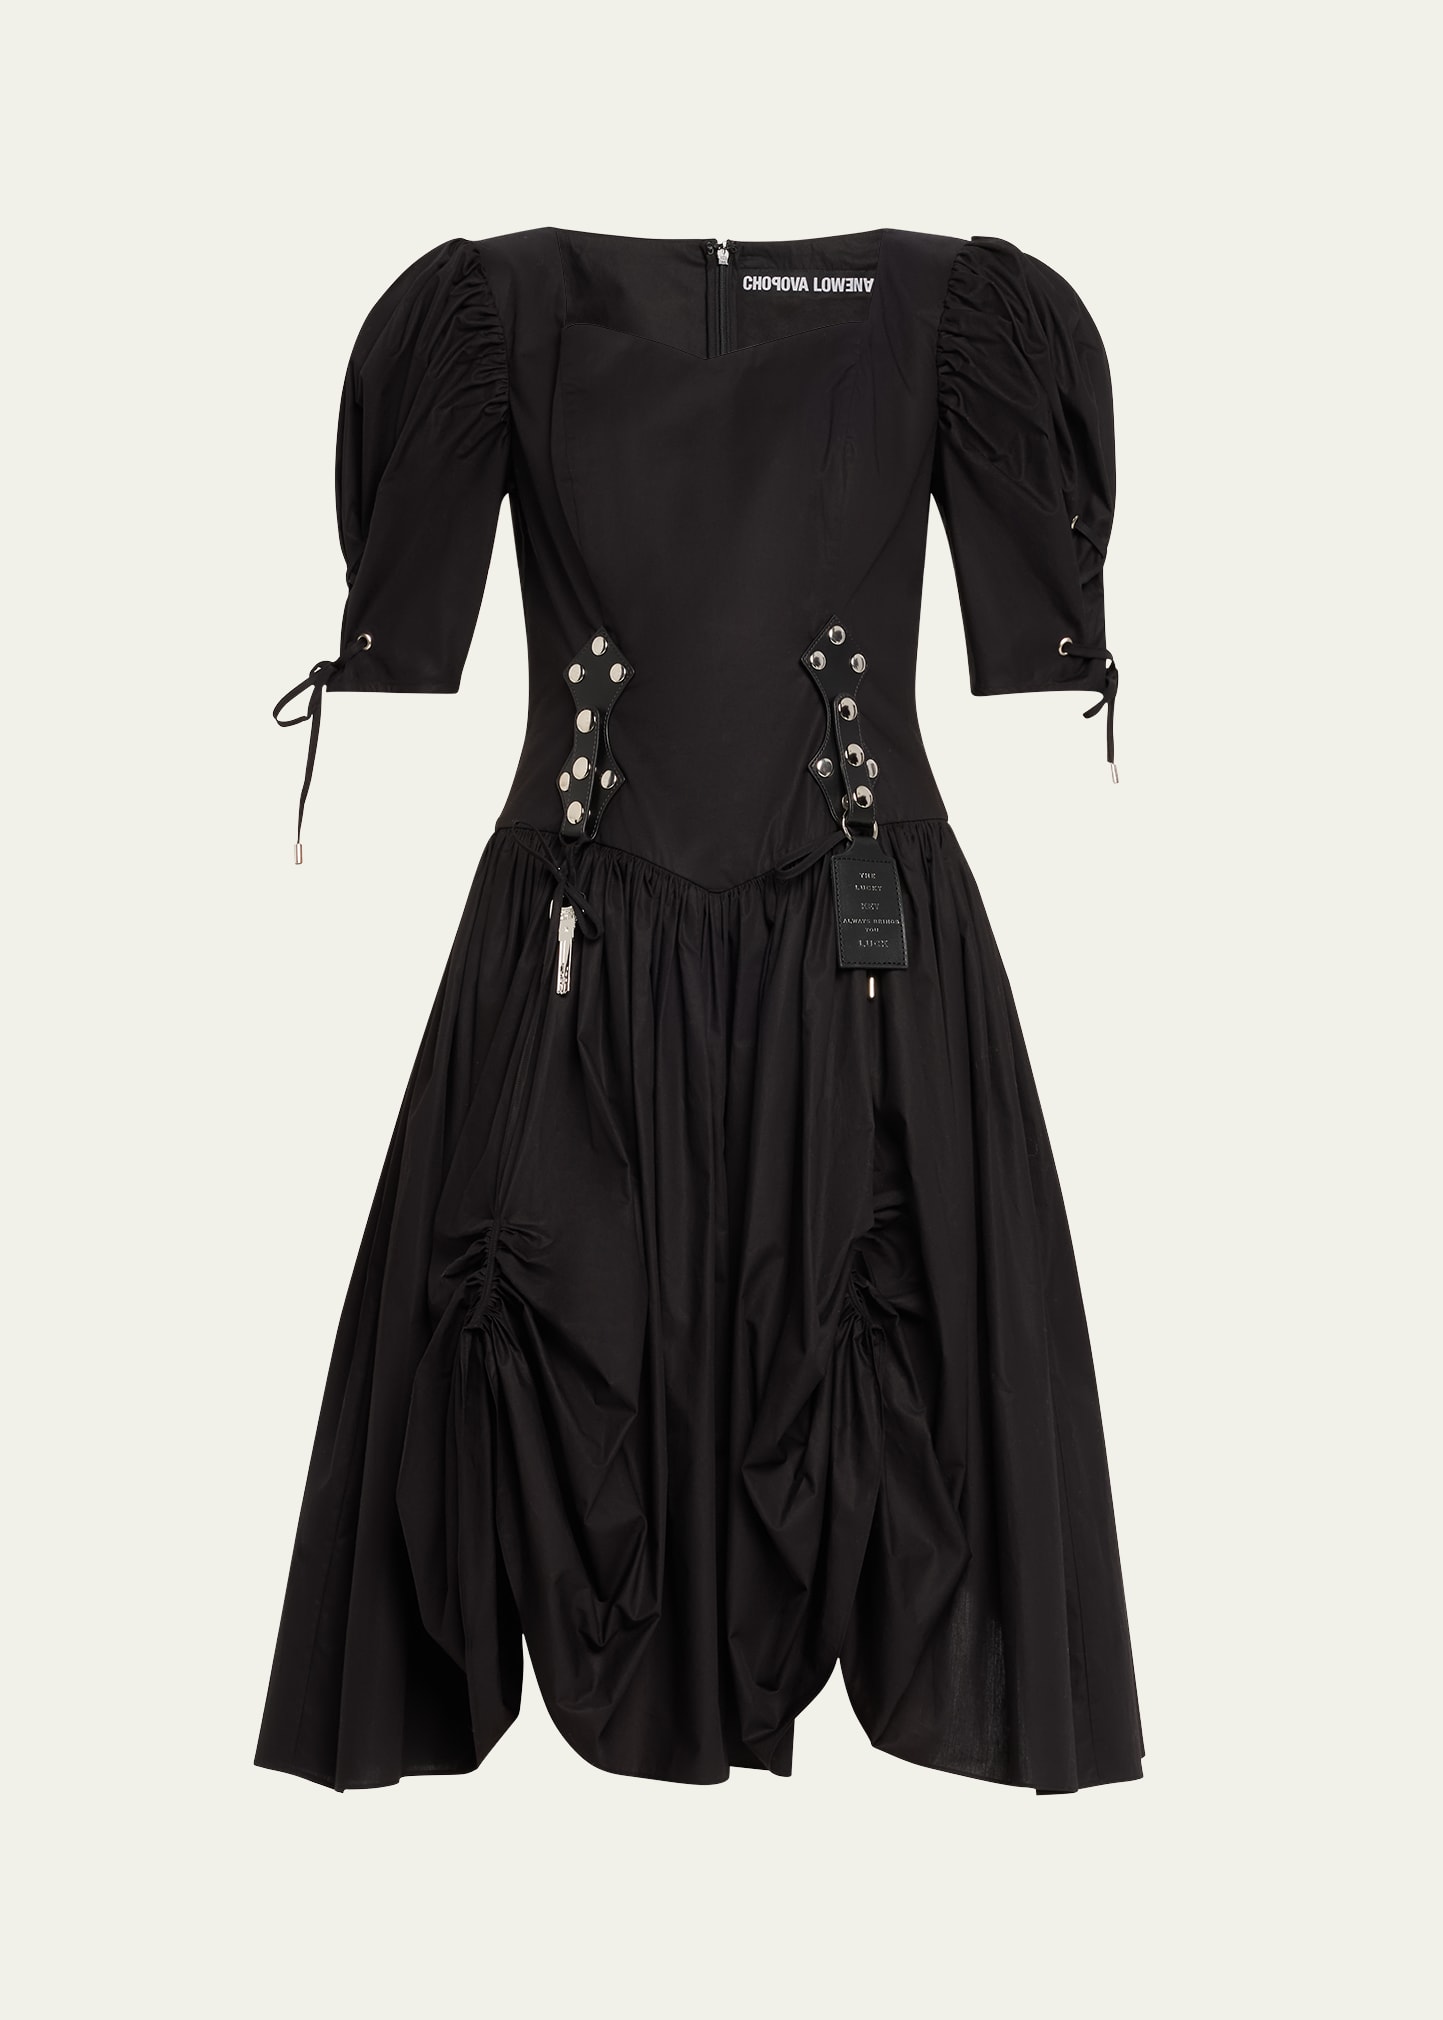 Chopova Lowena Crest Leather Ruched Dress In Black